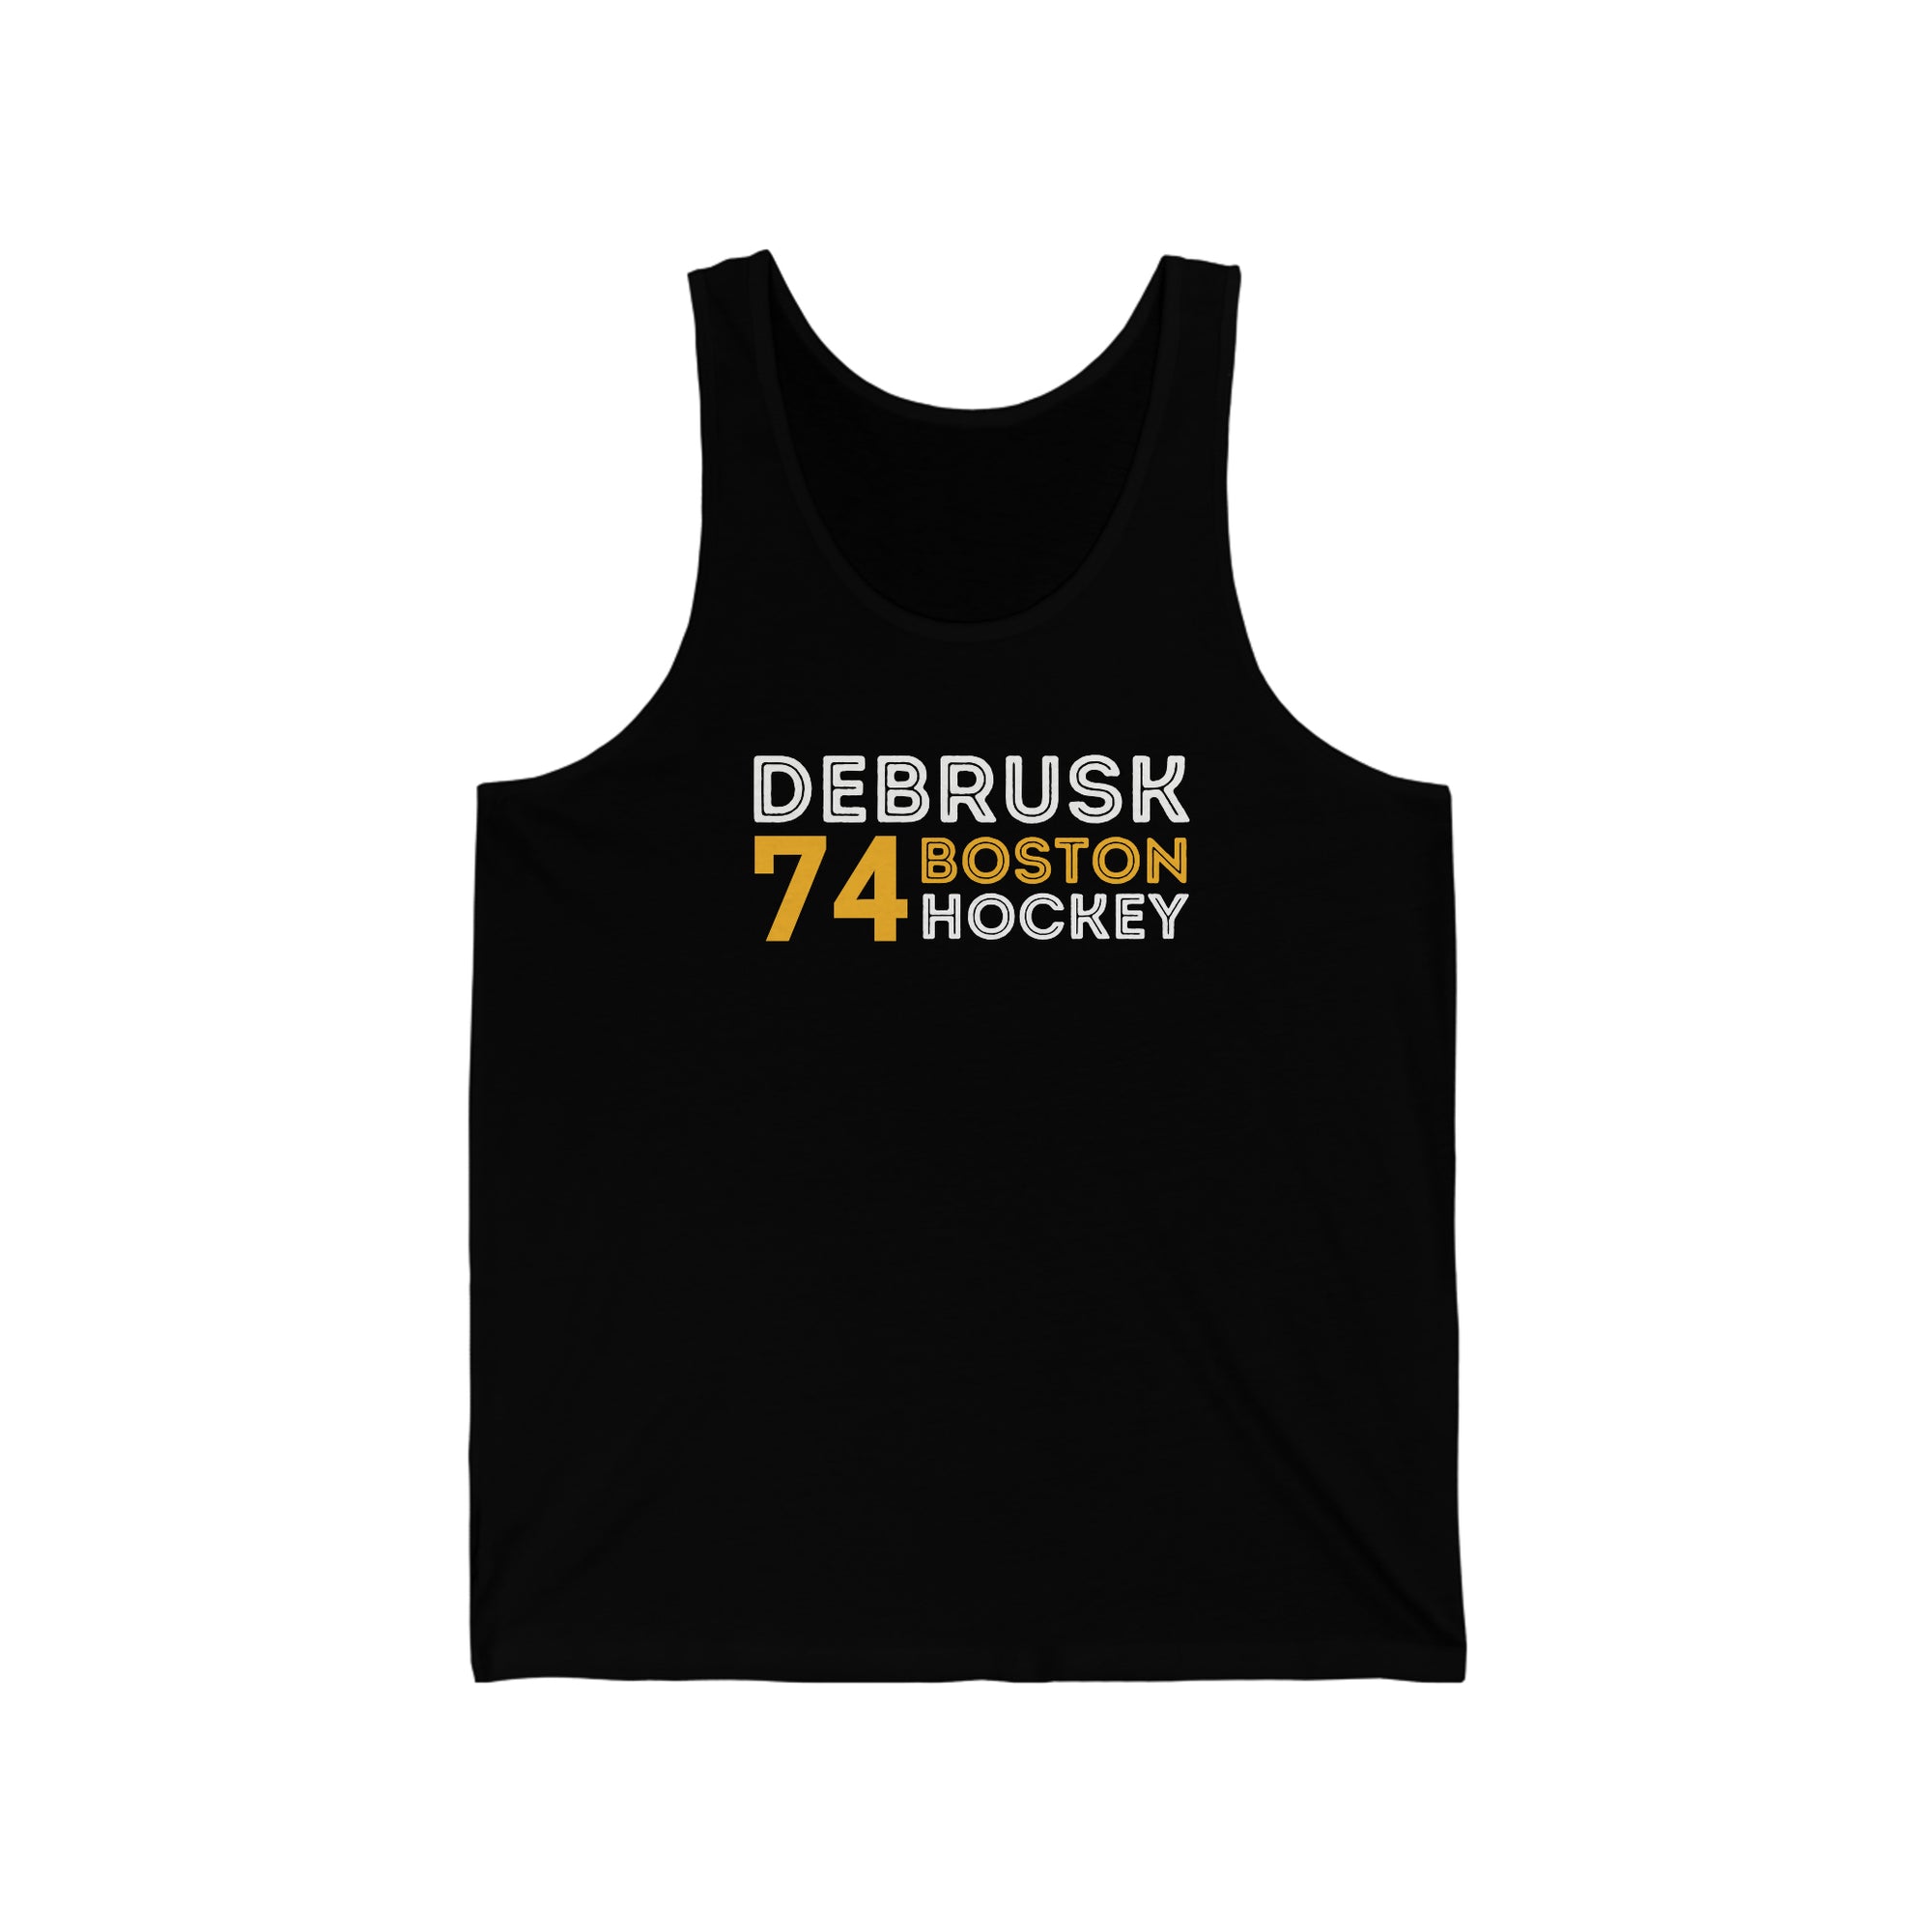 DeBrusk 74 Boston Hockey Grafitti Wall Design Unisex Jersey Tank Top